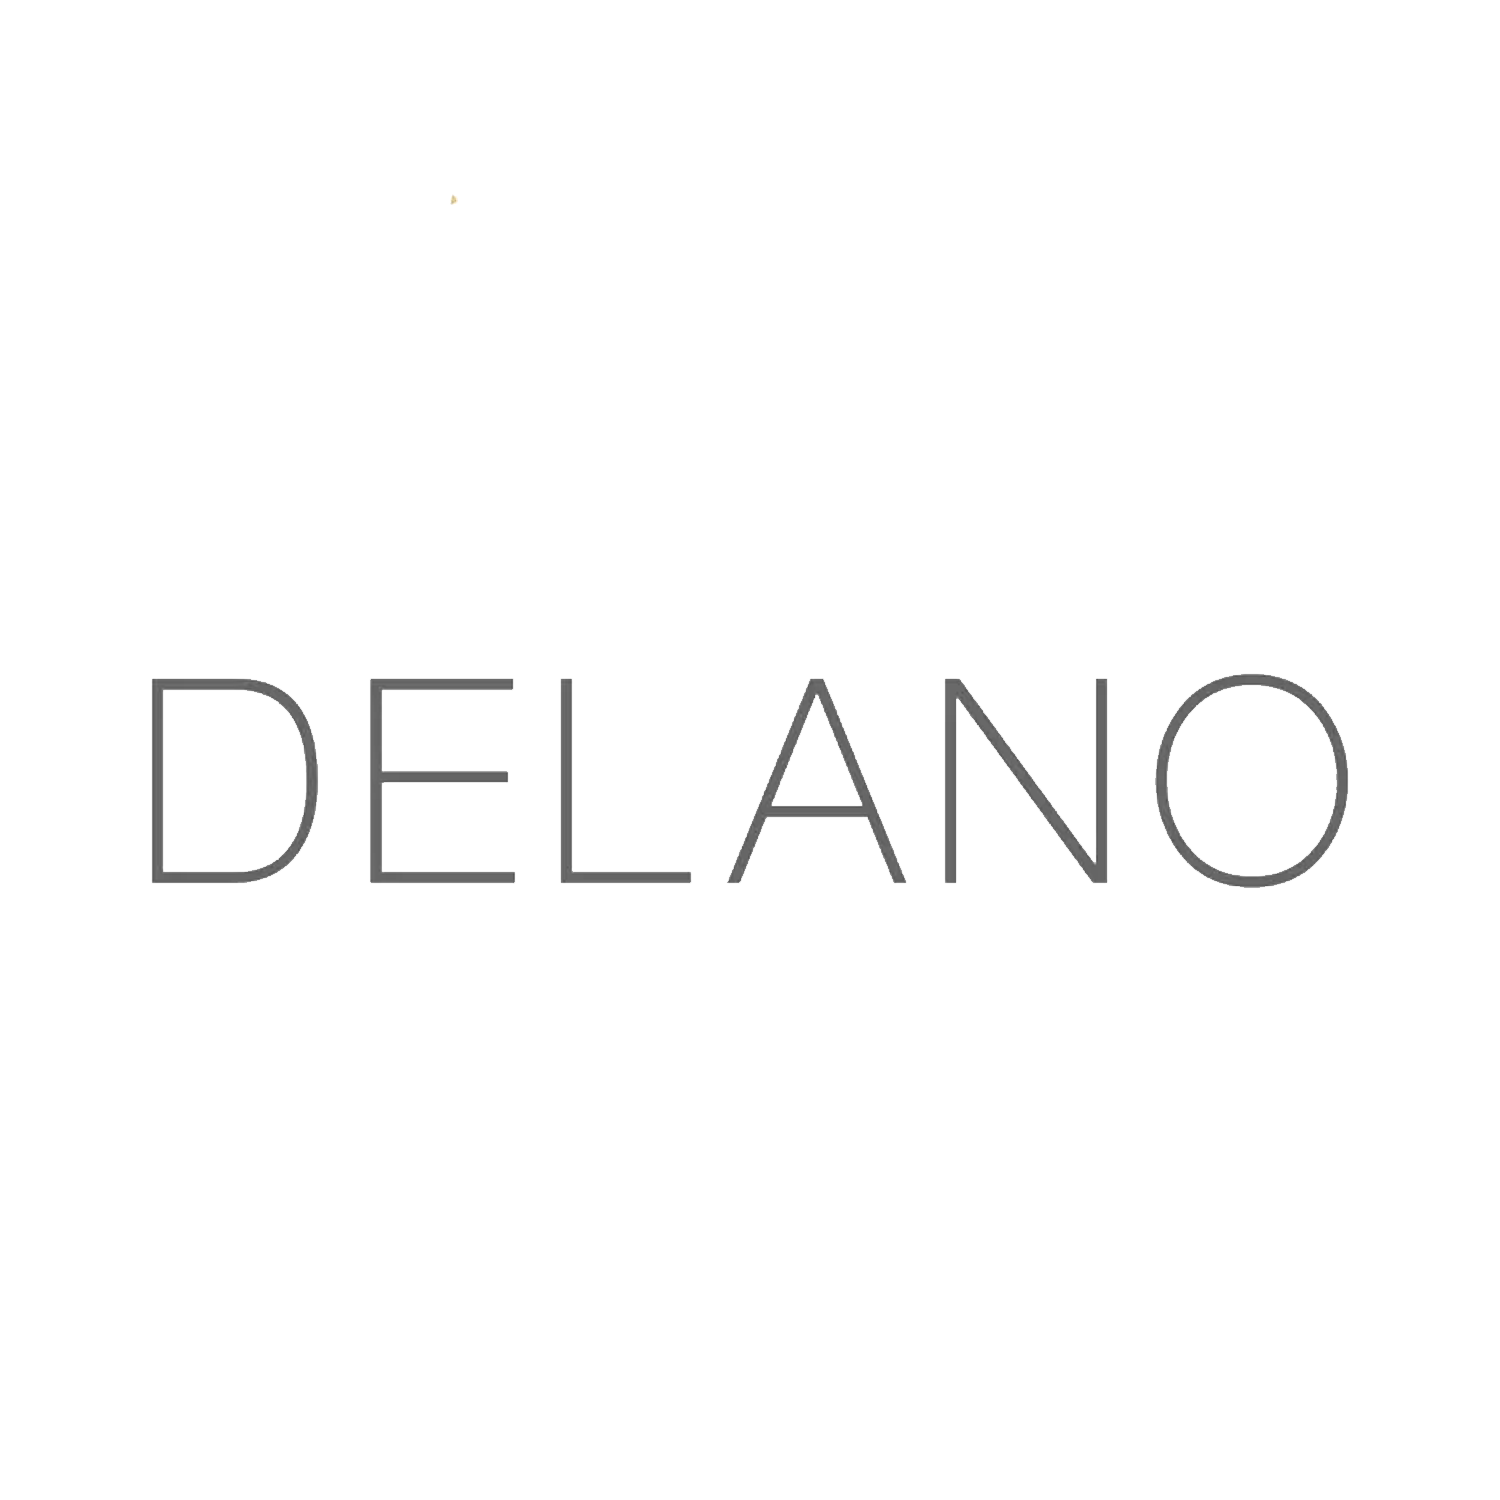 The Delano Hotel Logo